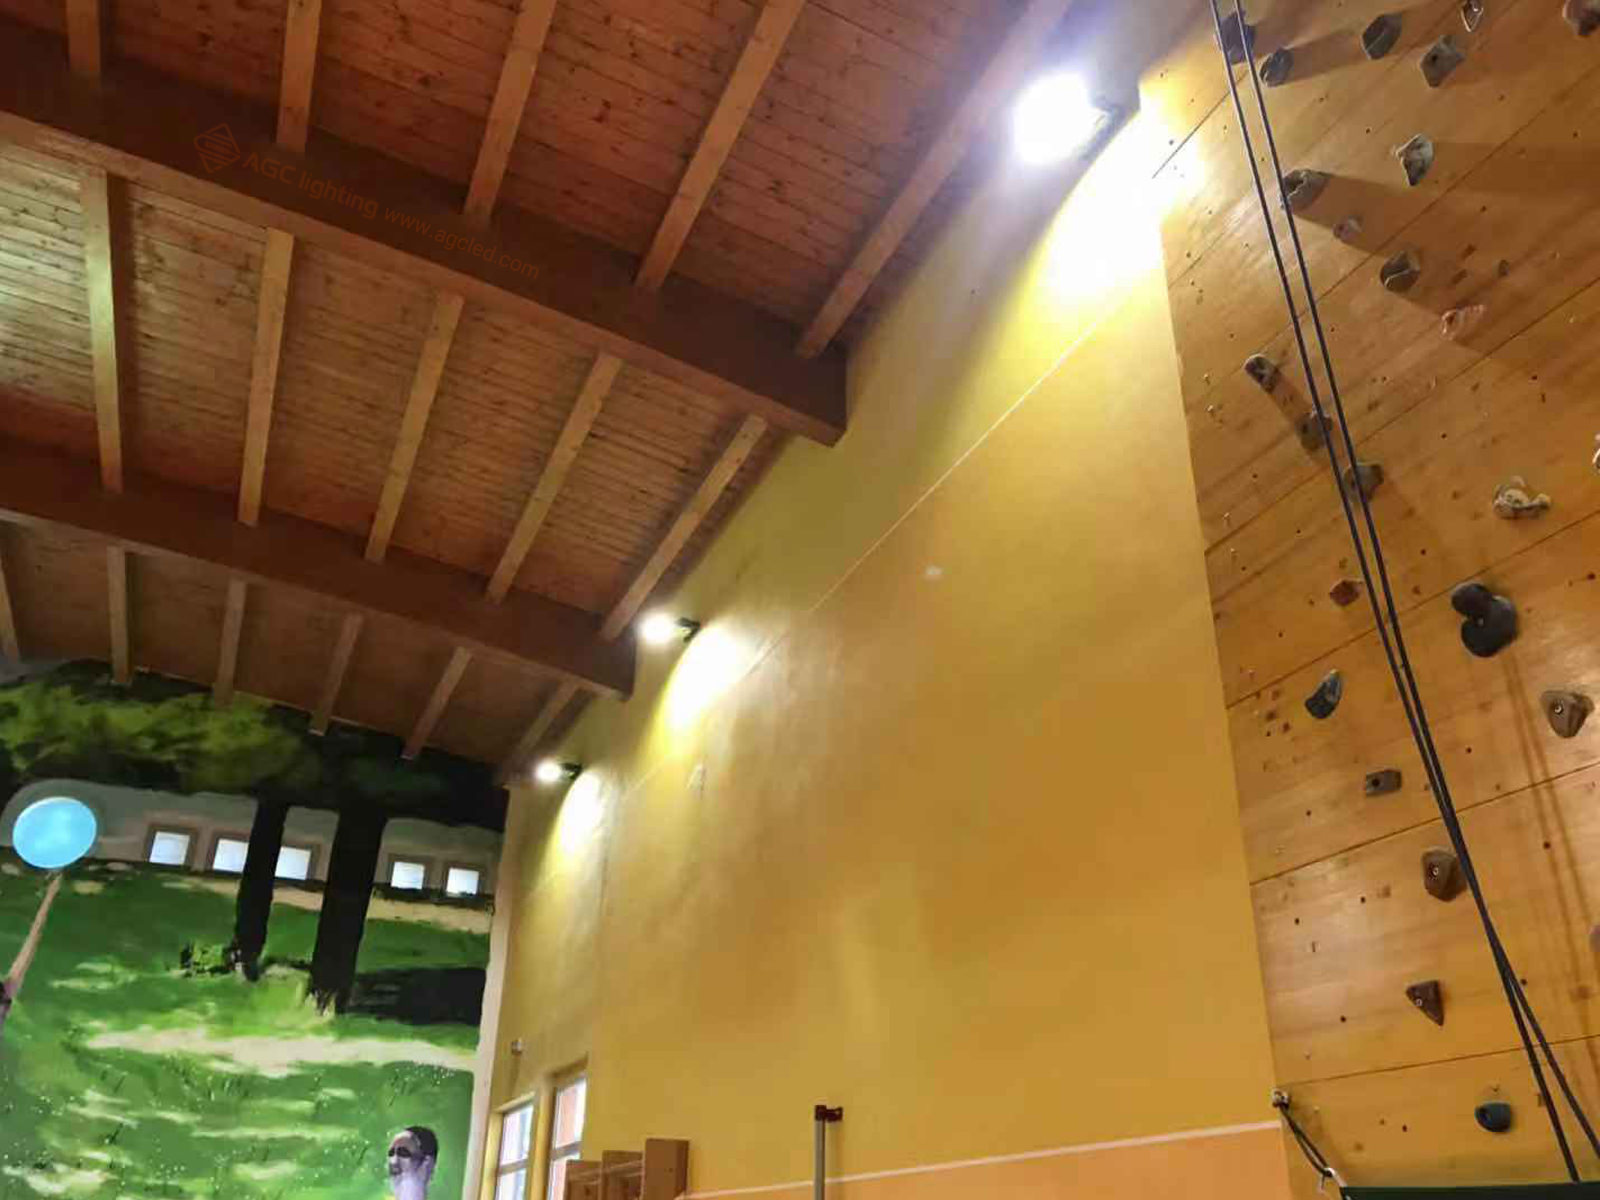 flood light application in gym for kids